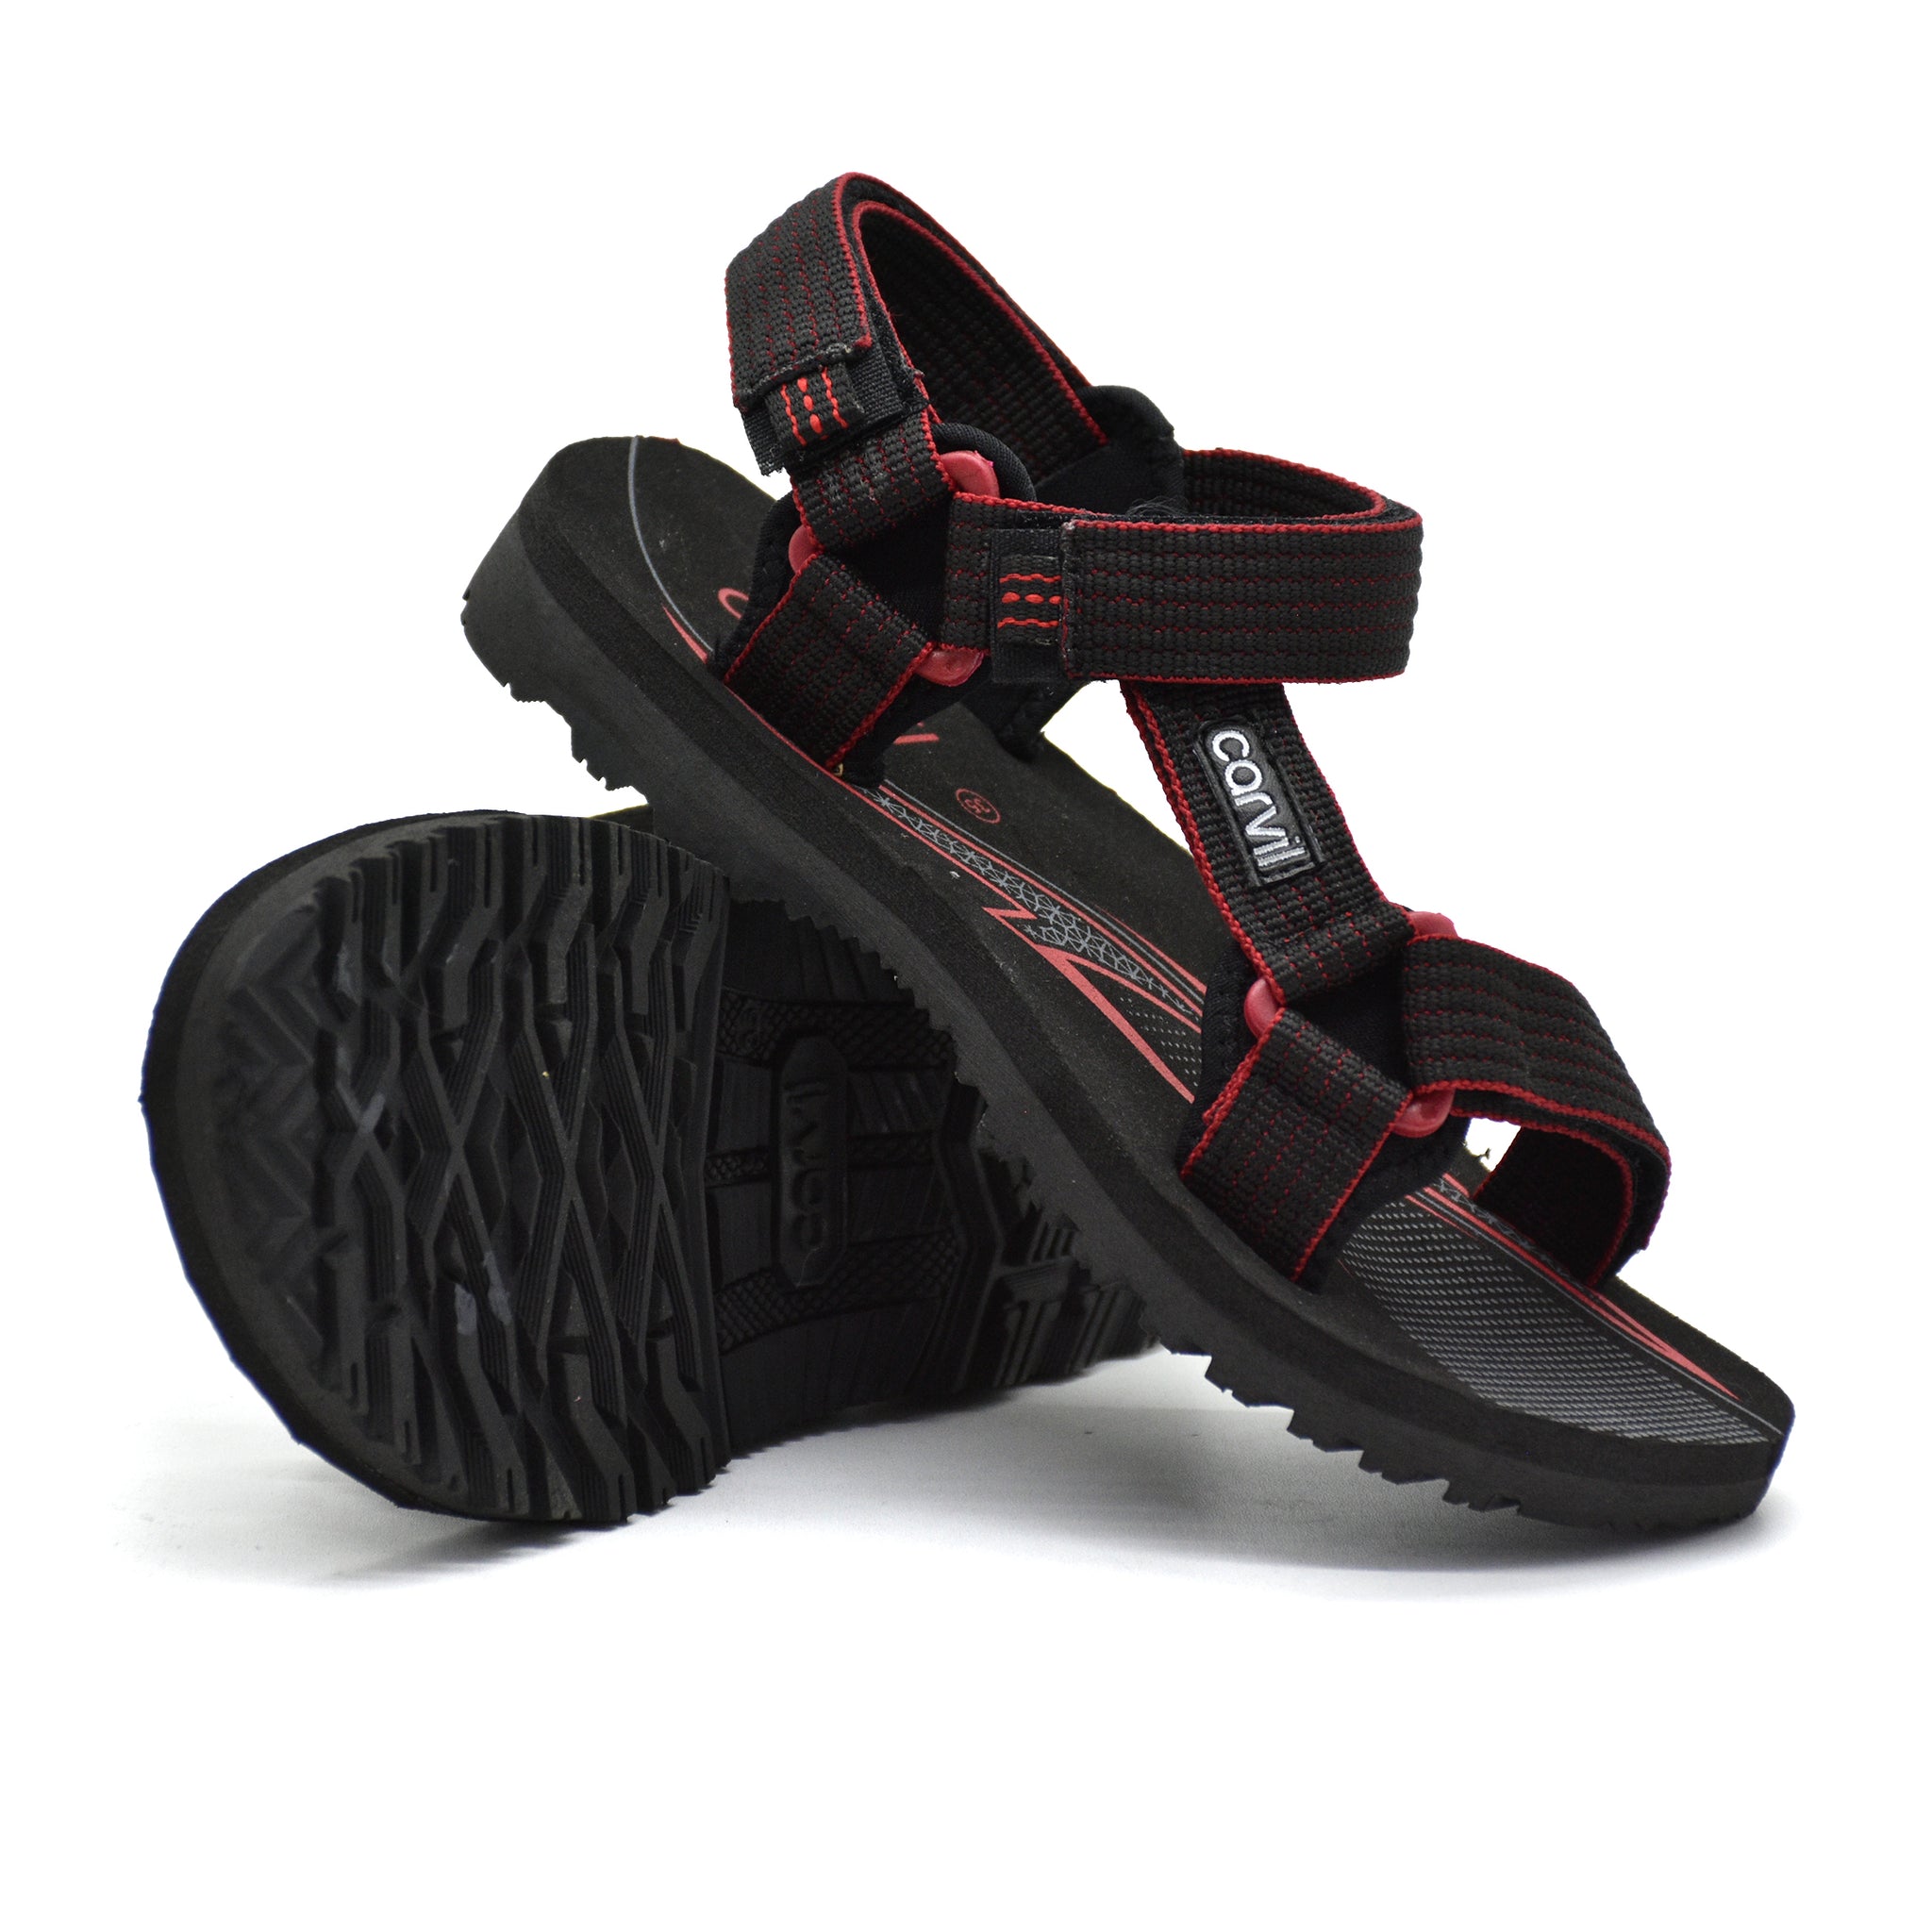 Carvil Sandal Anak PLANERY-GT BLACK/RED